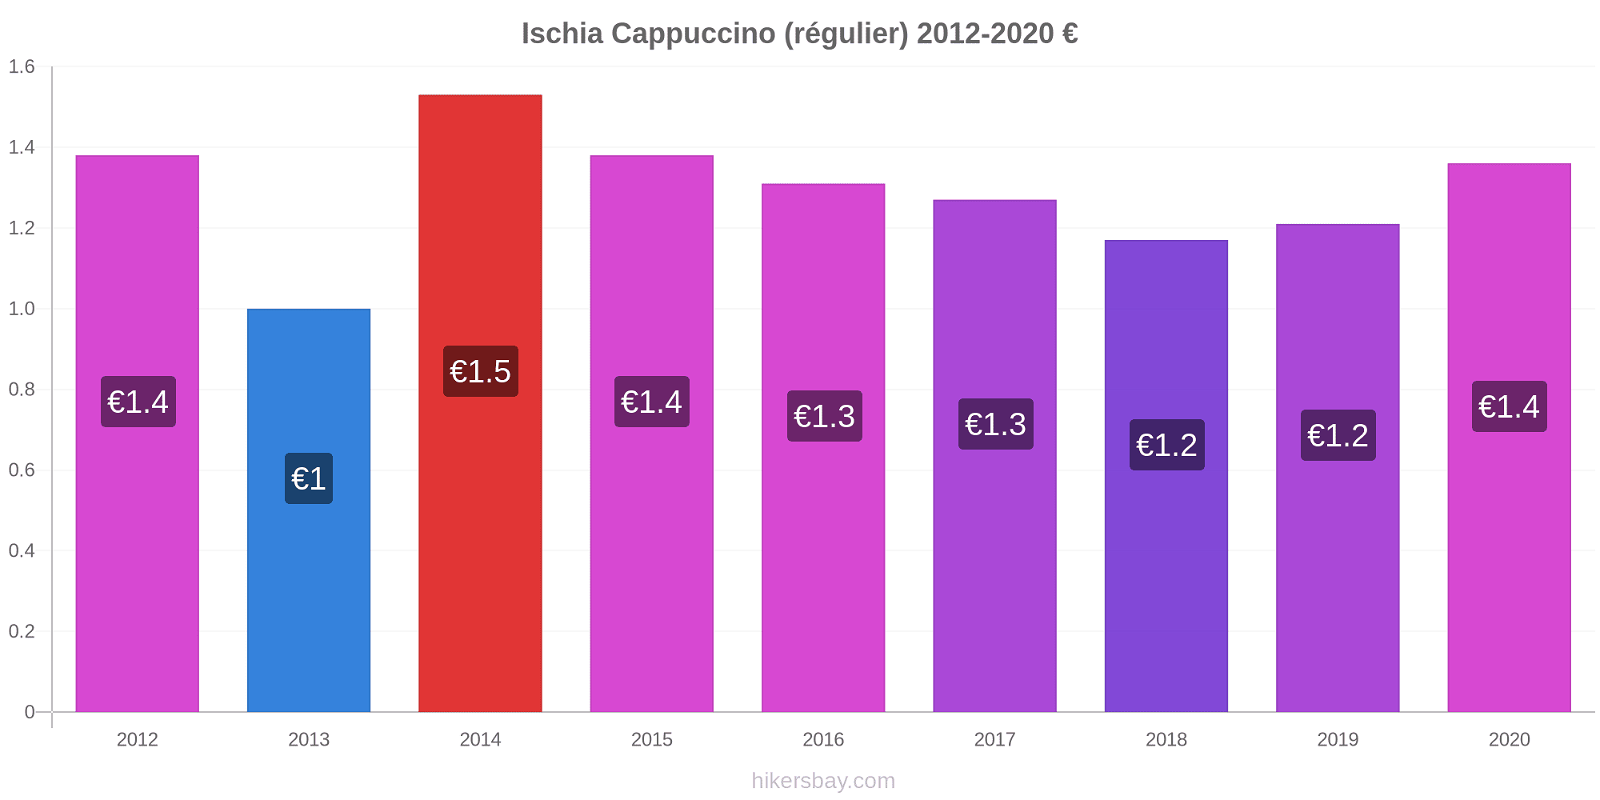 Ischia changements de prix Cappuccino (régulier) hikersbay.com